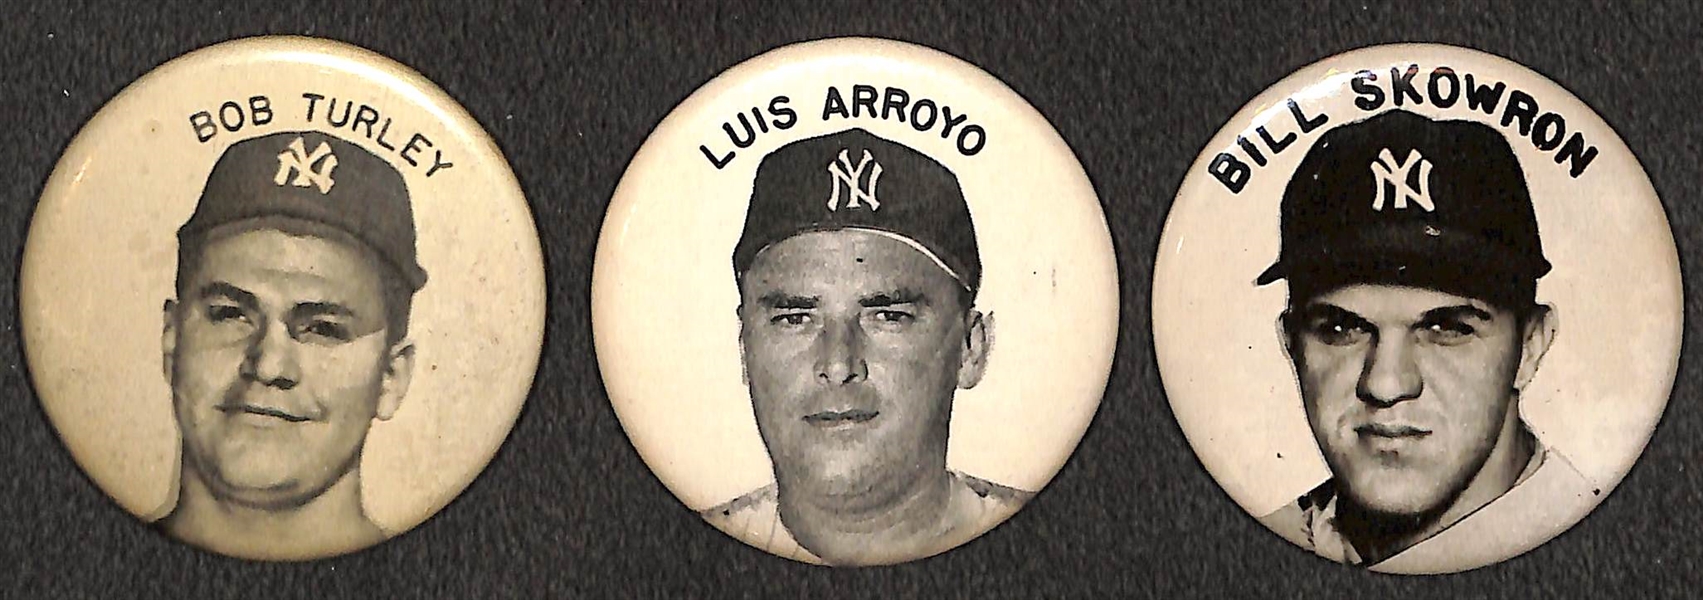 Lot of (3) 1950s PM10 NY Yankees Stadium Pins (Bob Turley, Luis Arroyo, Moose Skowron) - Missing Pin Backs